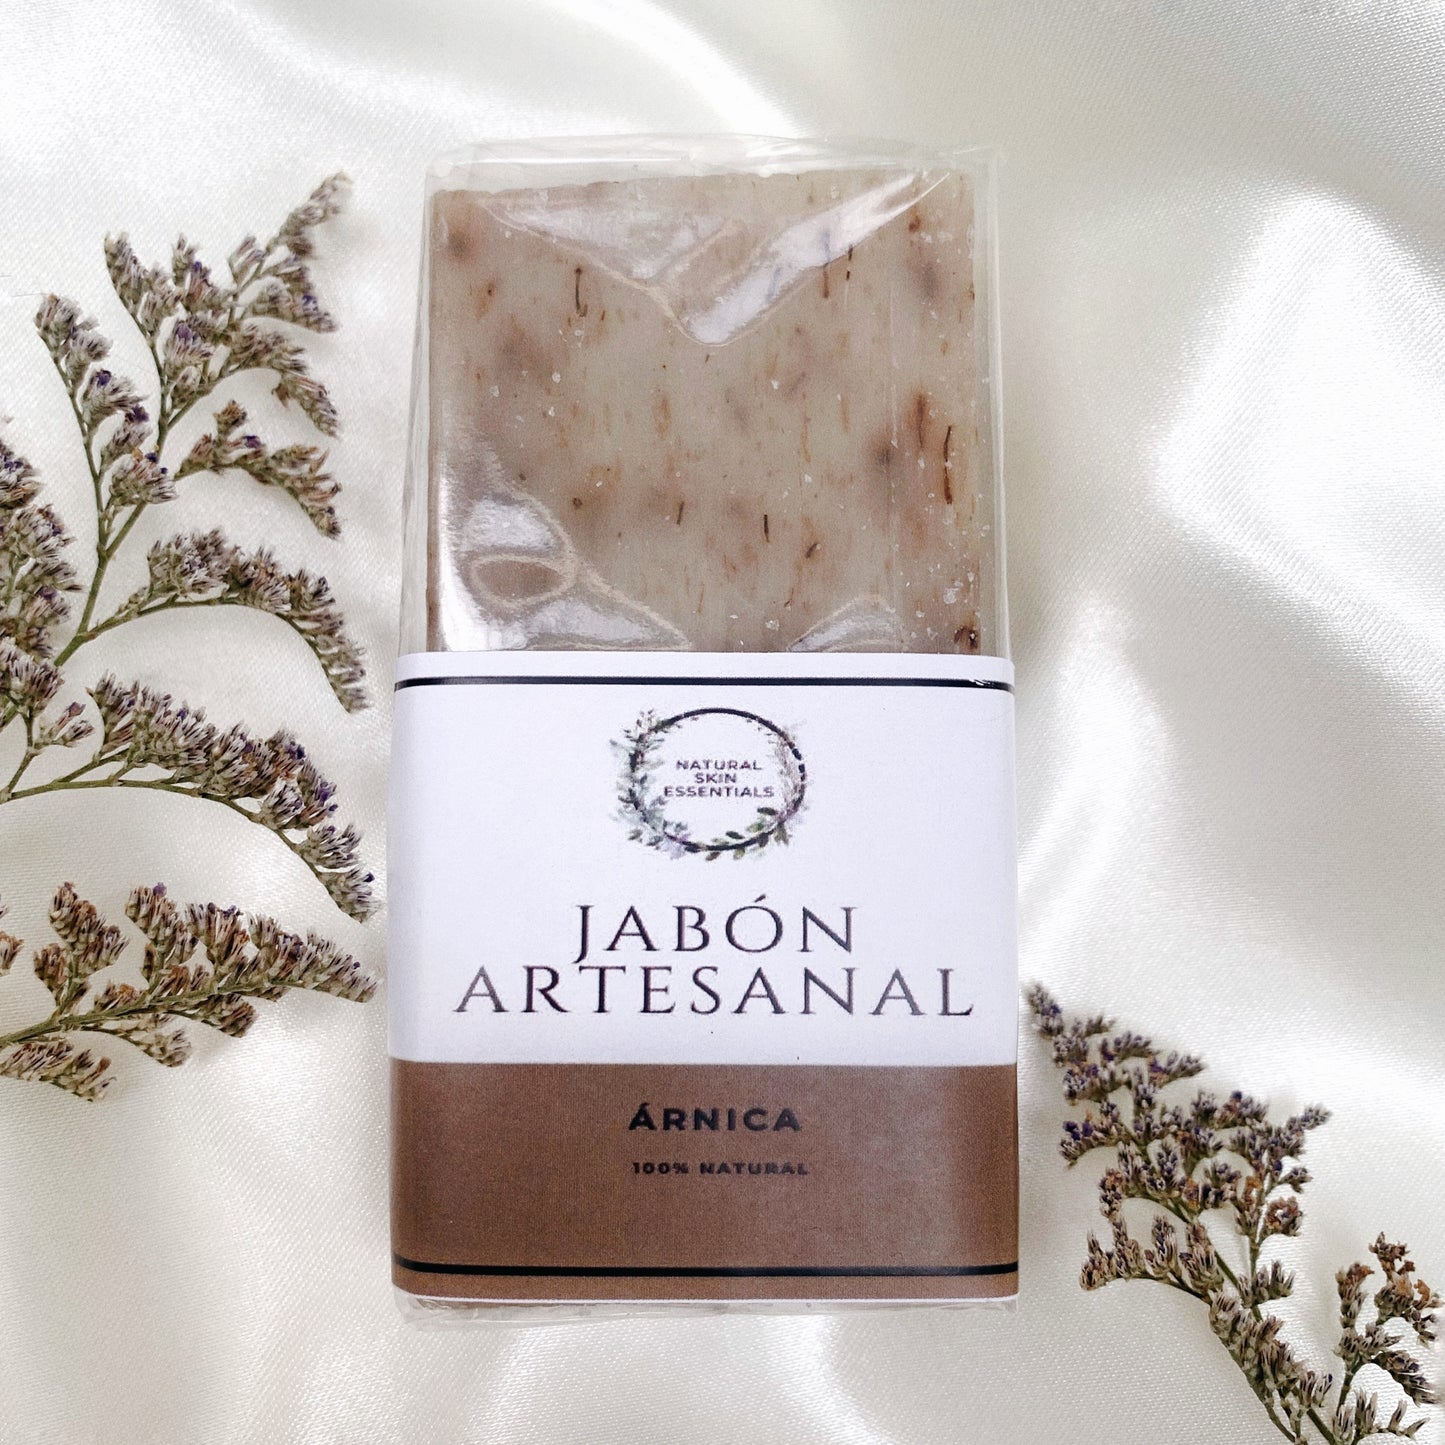 Arnica handmade soap